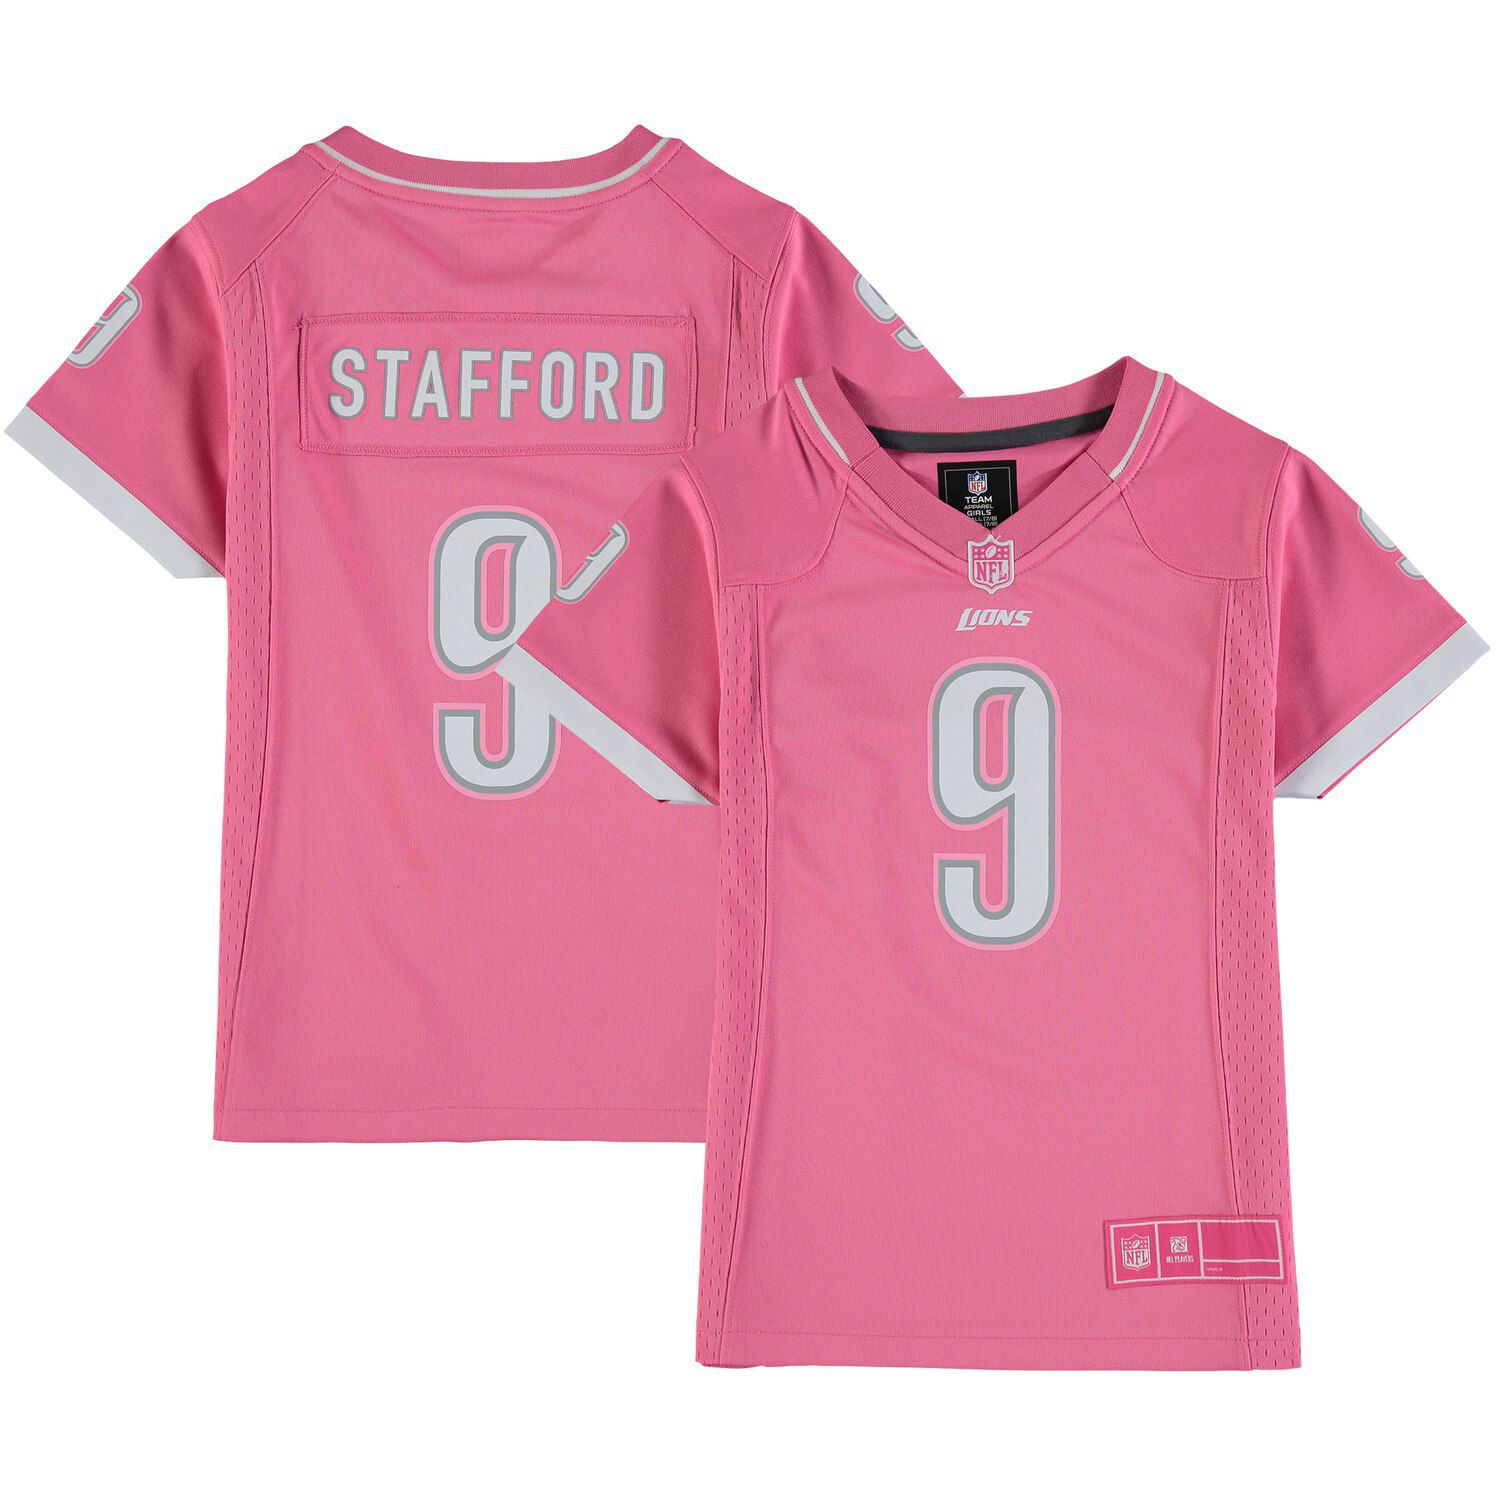 matthew stafford pink jersey